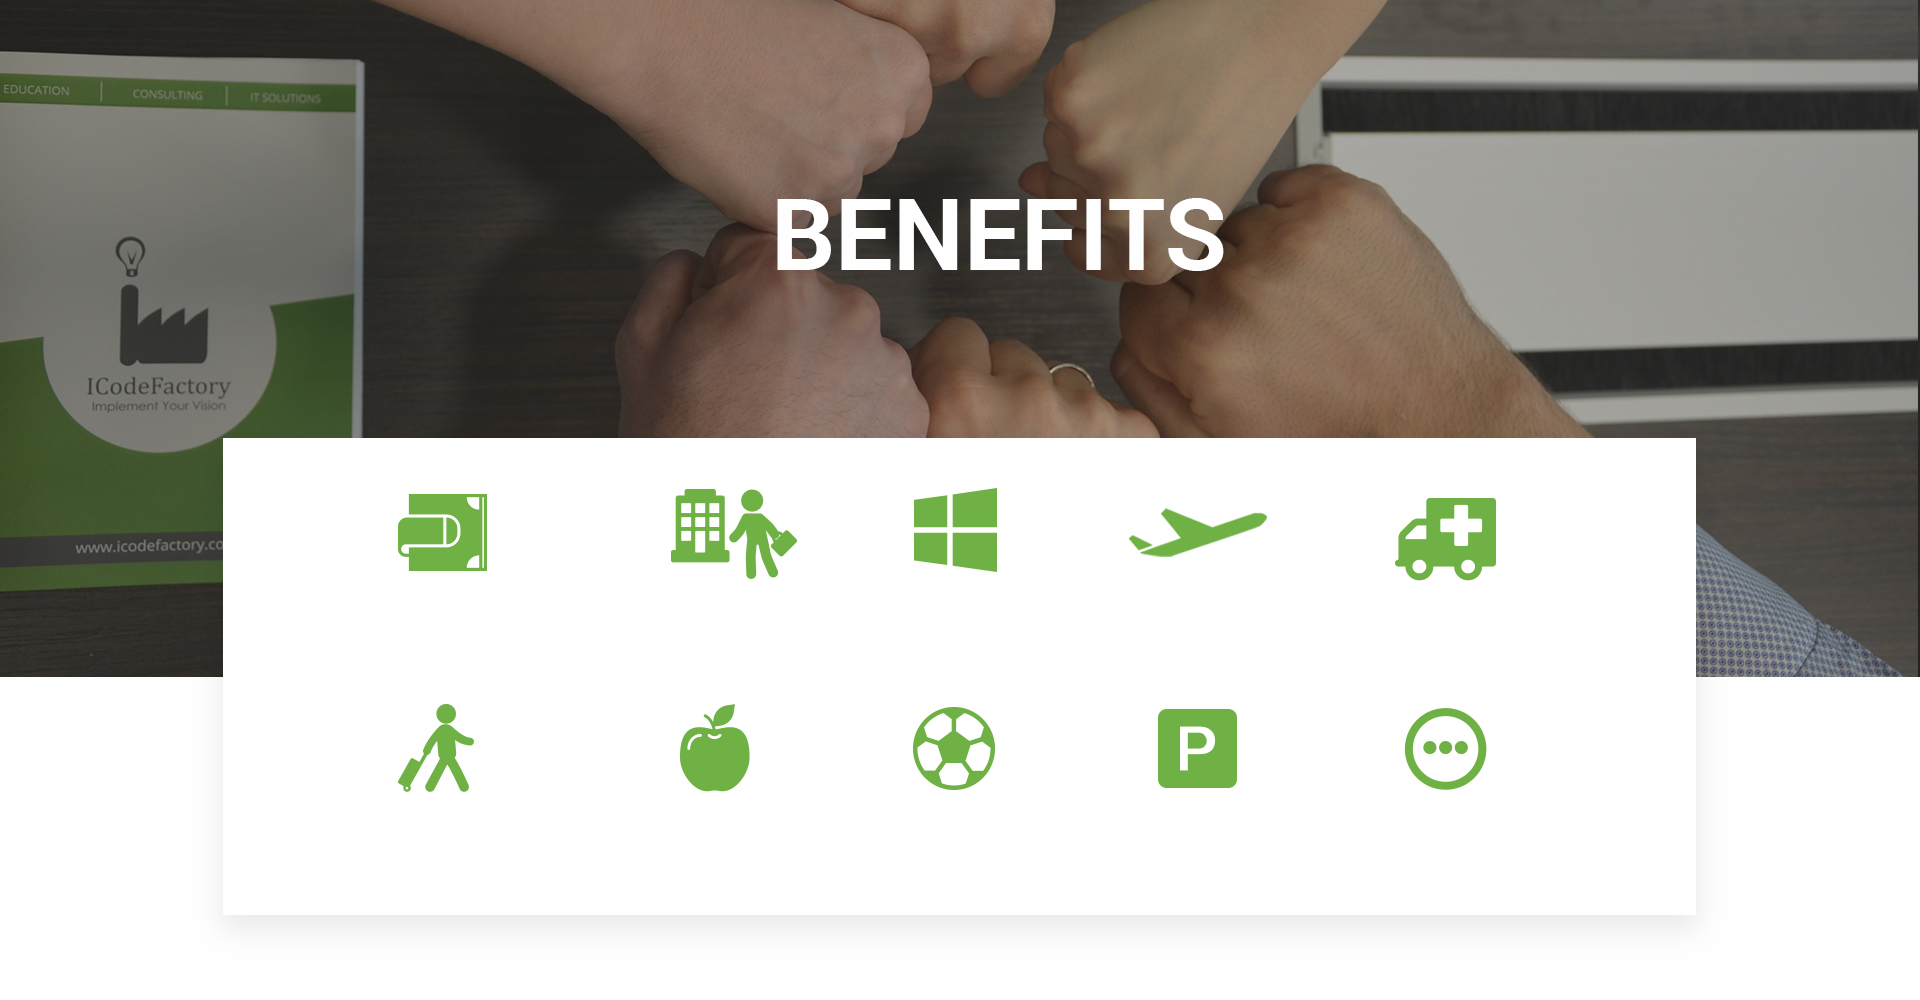 Benefits Image Fullscreen